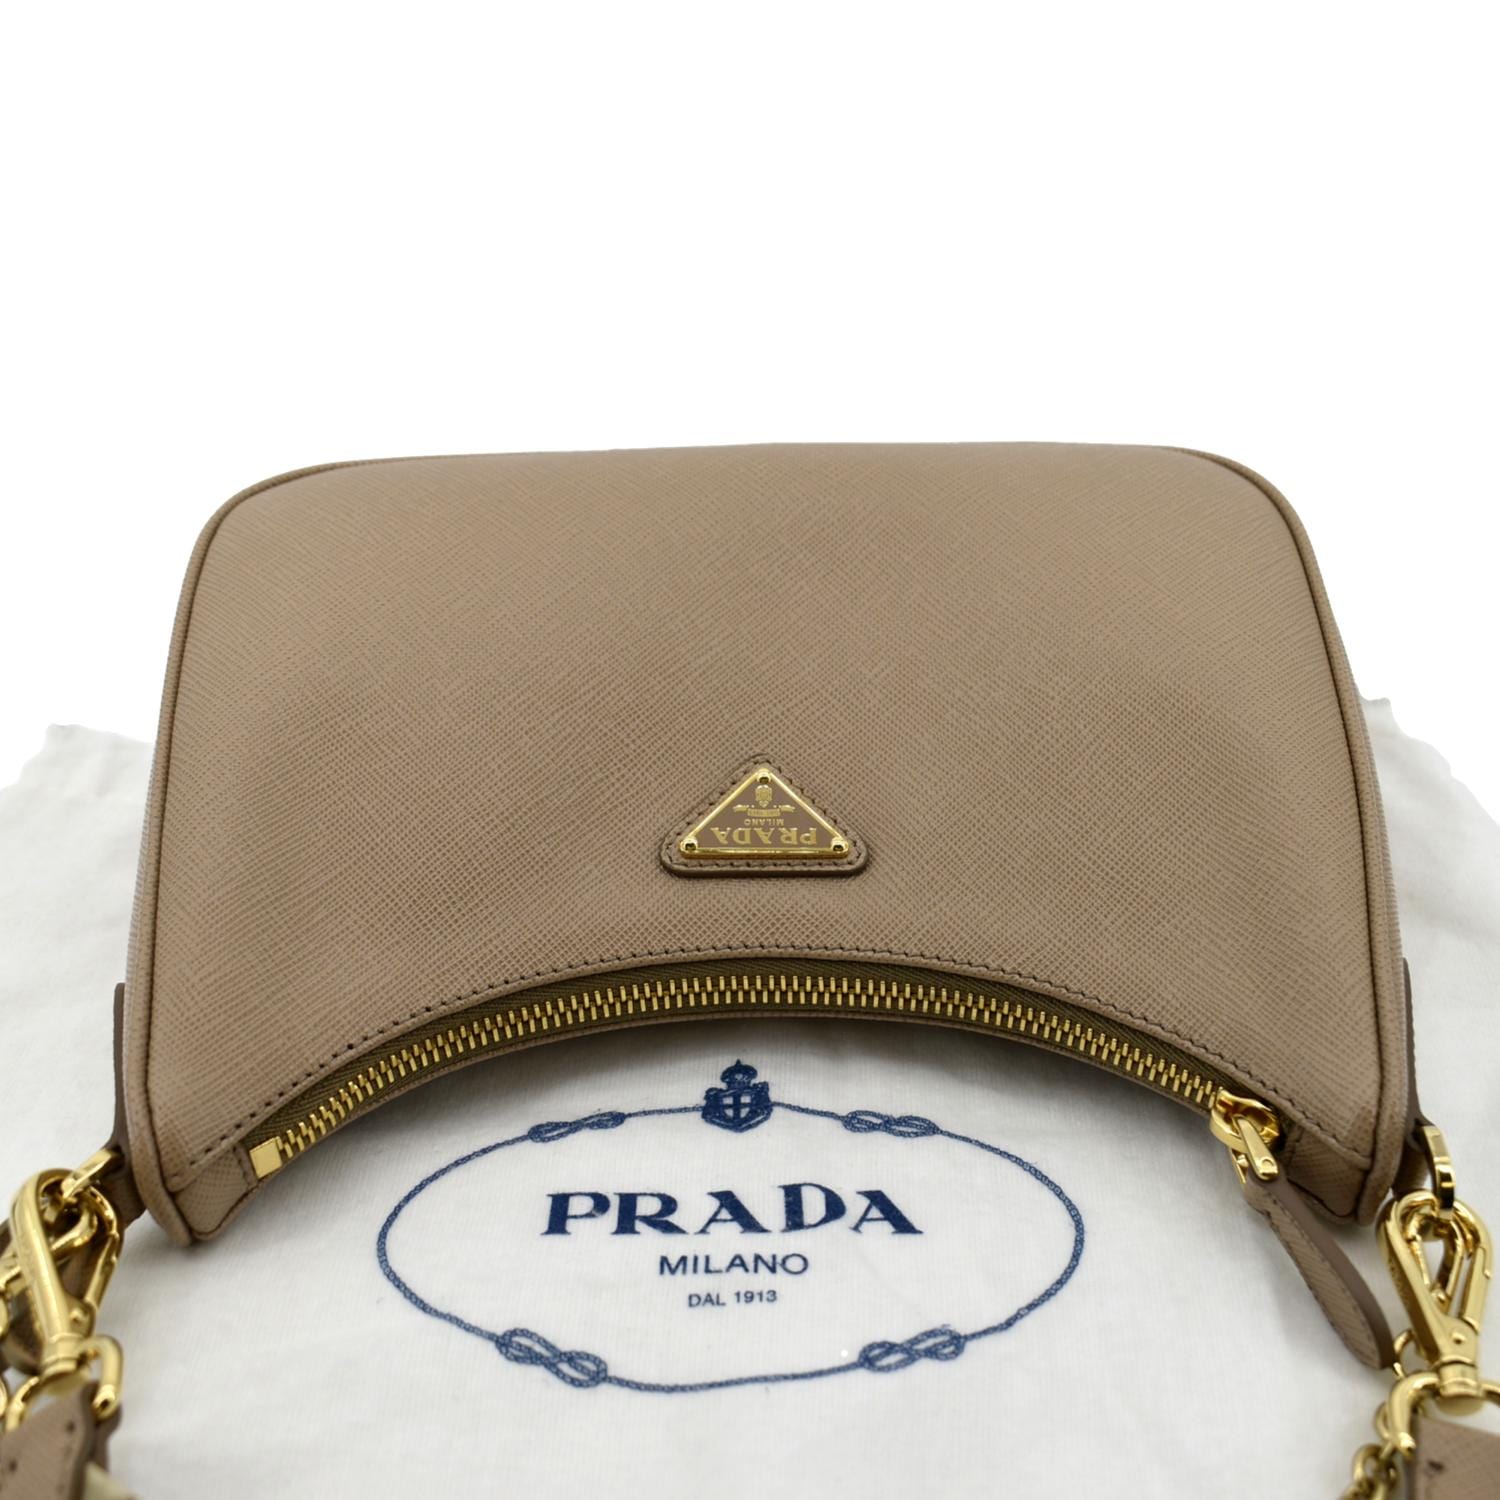 Prada Re-Edition 2005 Saffiano Leather Bag - Neutrals Crossbody